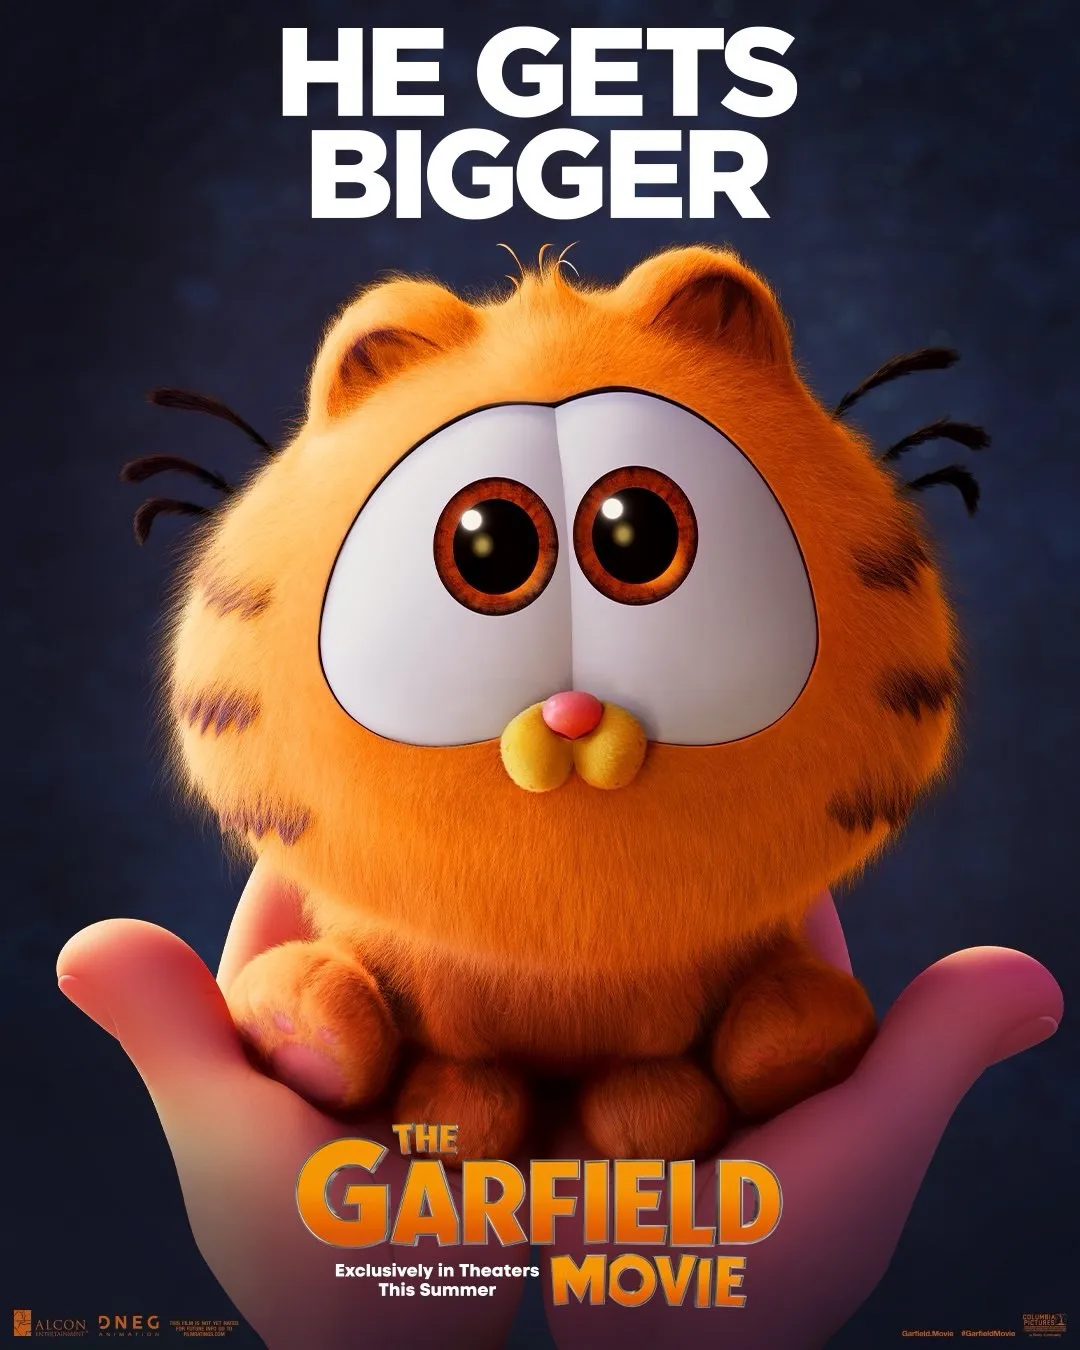 a487a3f1 63d0 43f1 95b1 4f0acaec606b 8045 00000de1d370e655 file Divulgado pôster para Garfield.